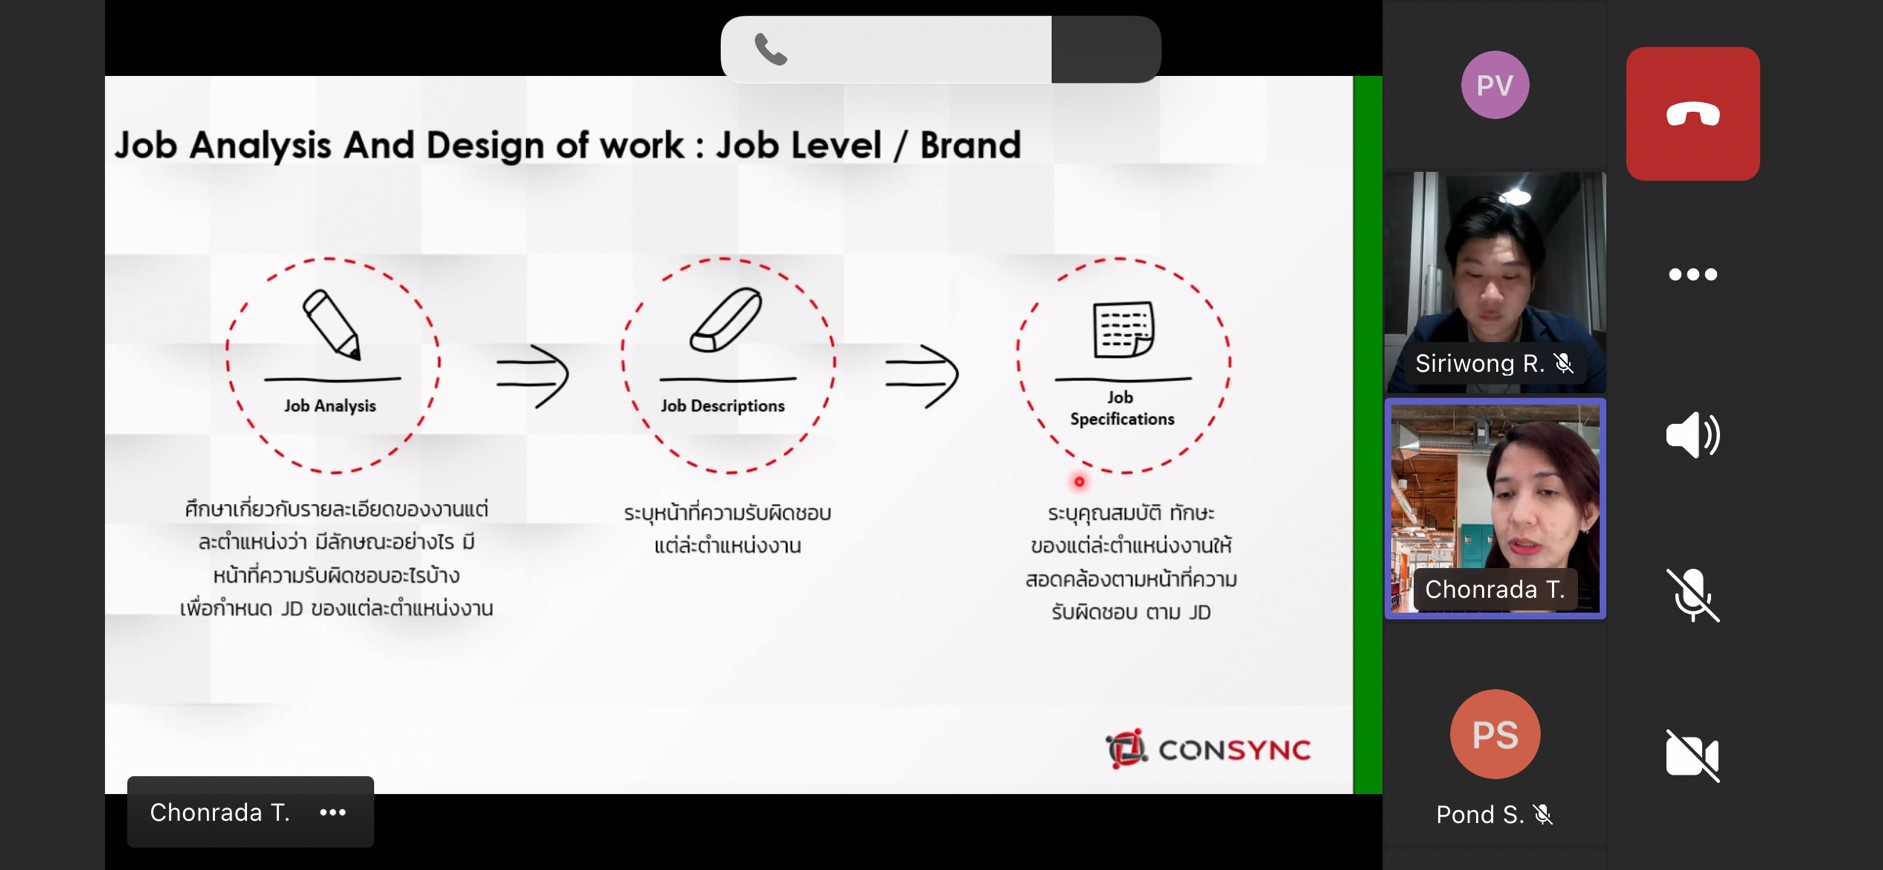 Job Level / Brand Analysis by Consync Team